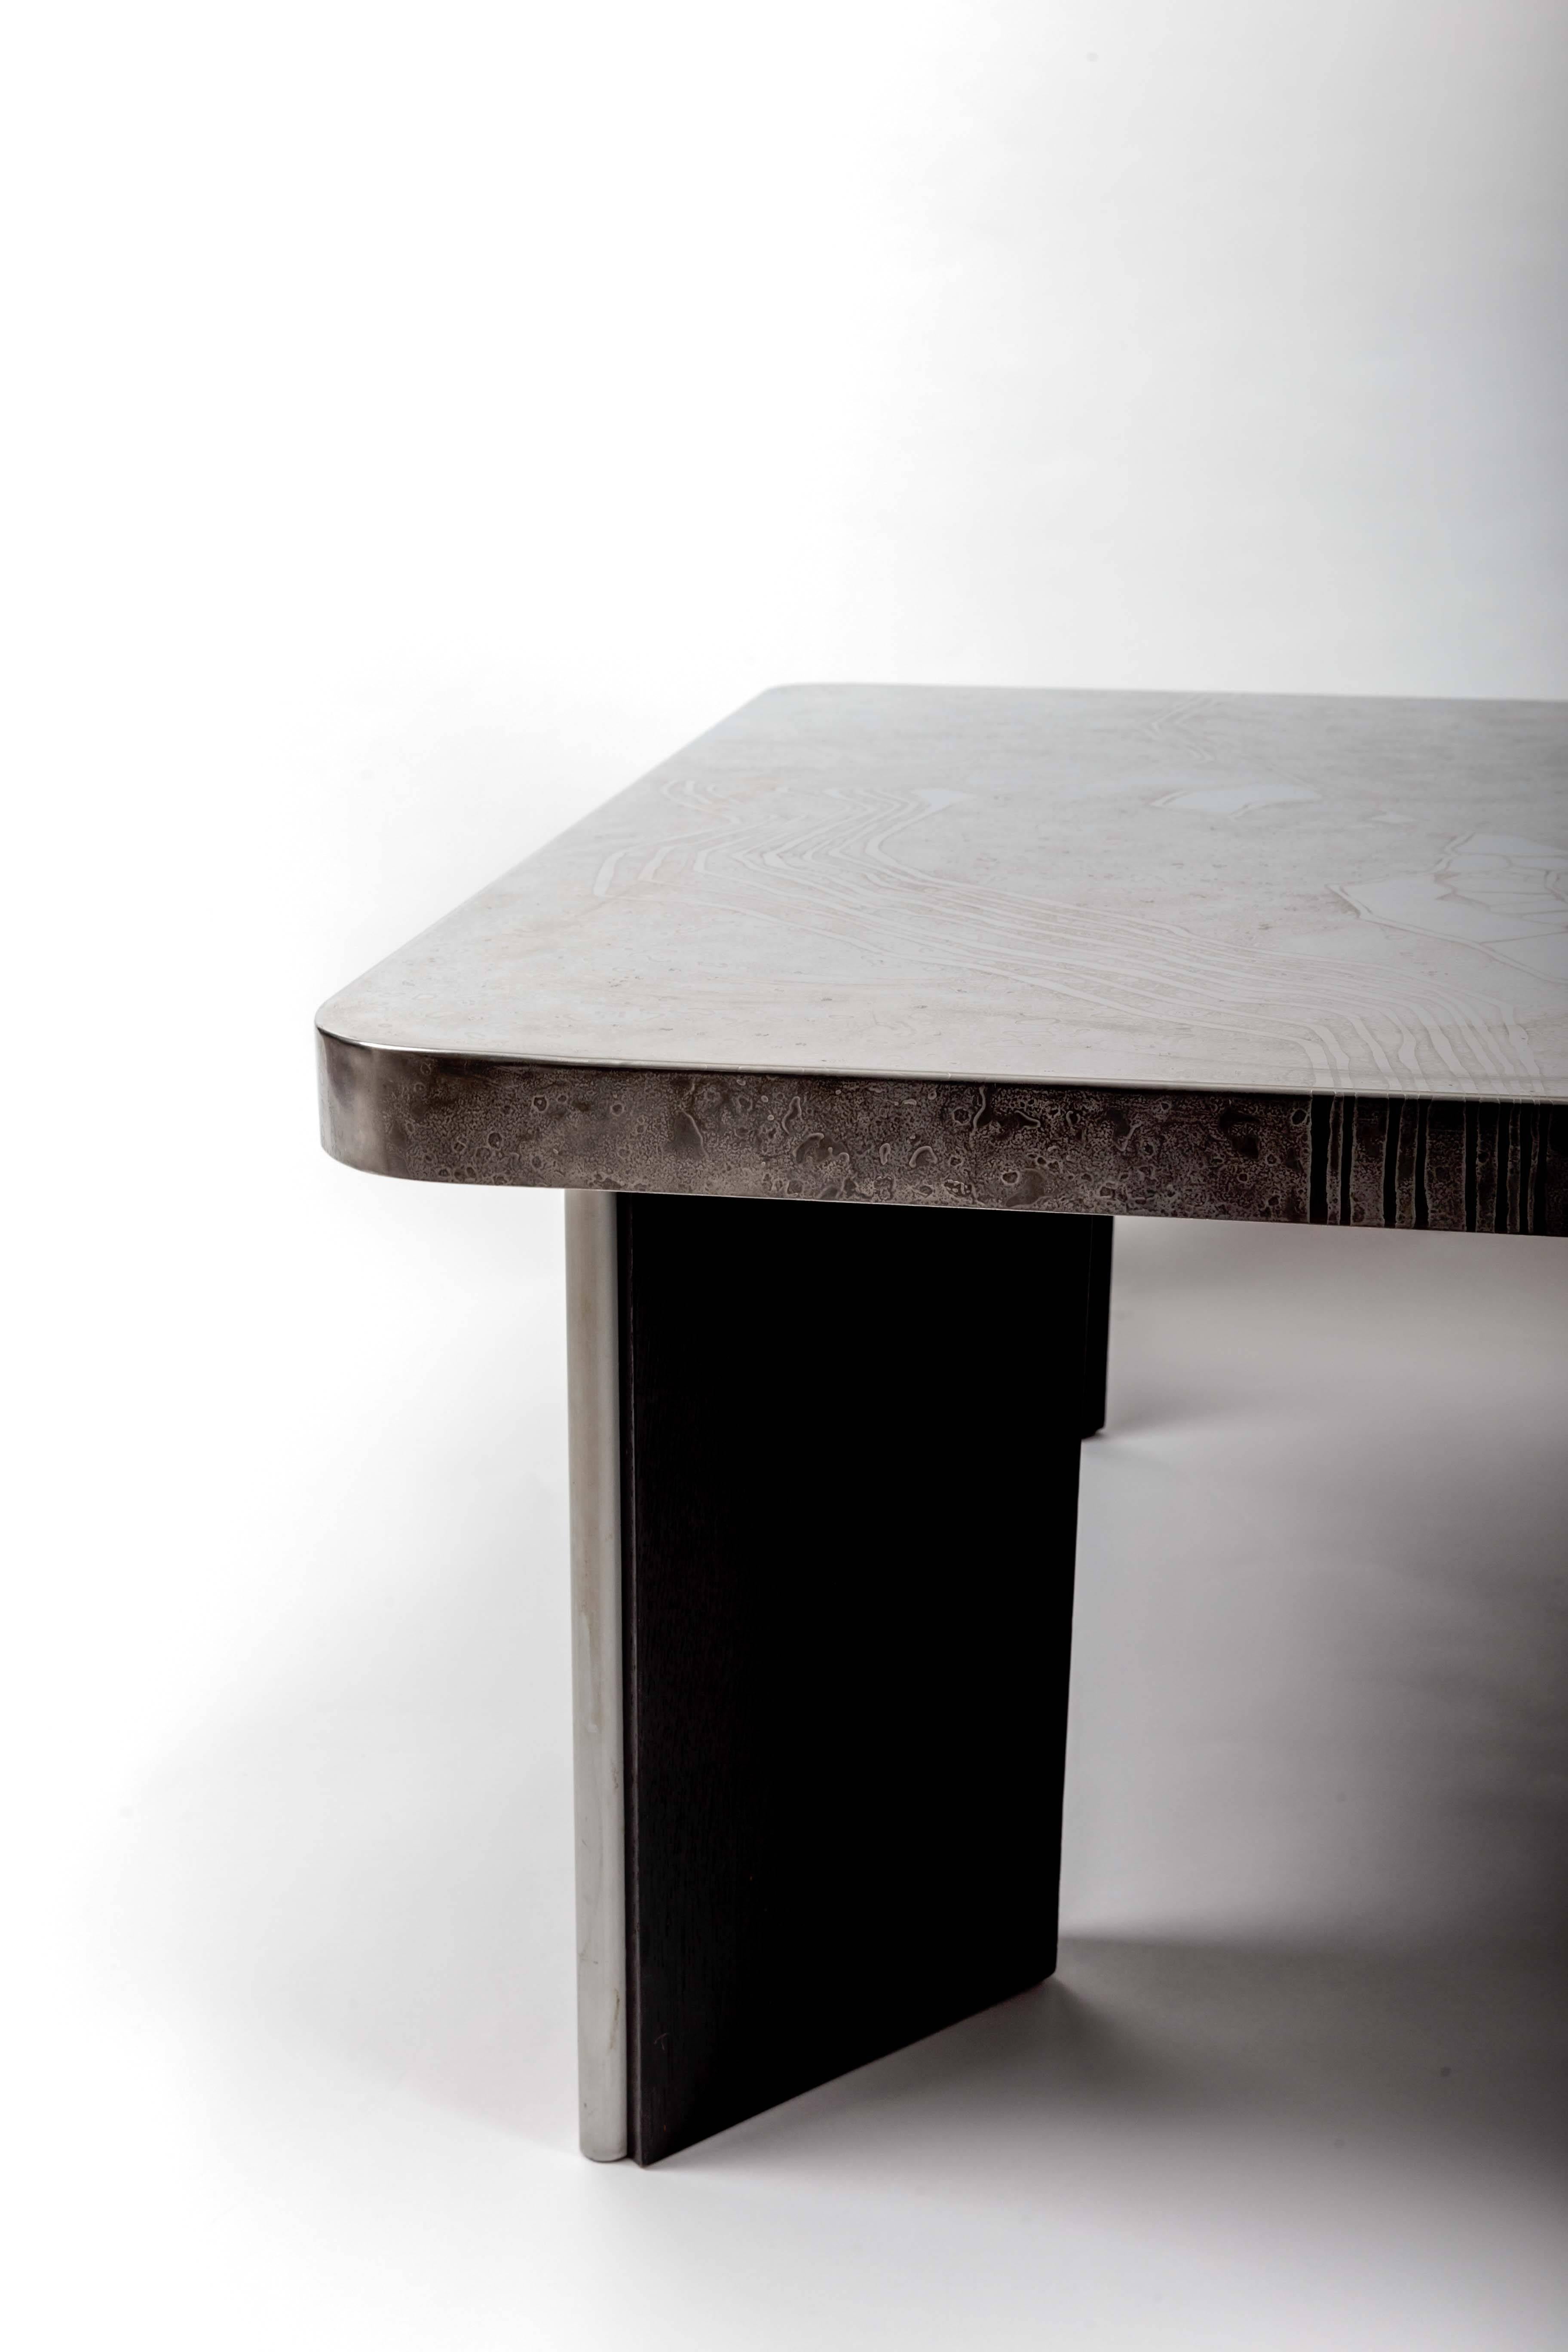 Modernist Aluminum Cocktail Table with Etched Design, on Black Wooden Base 3